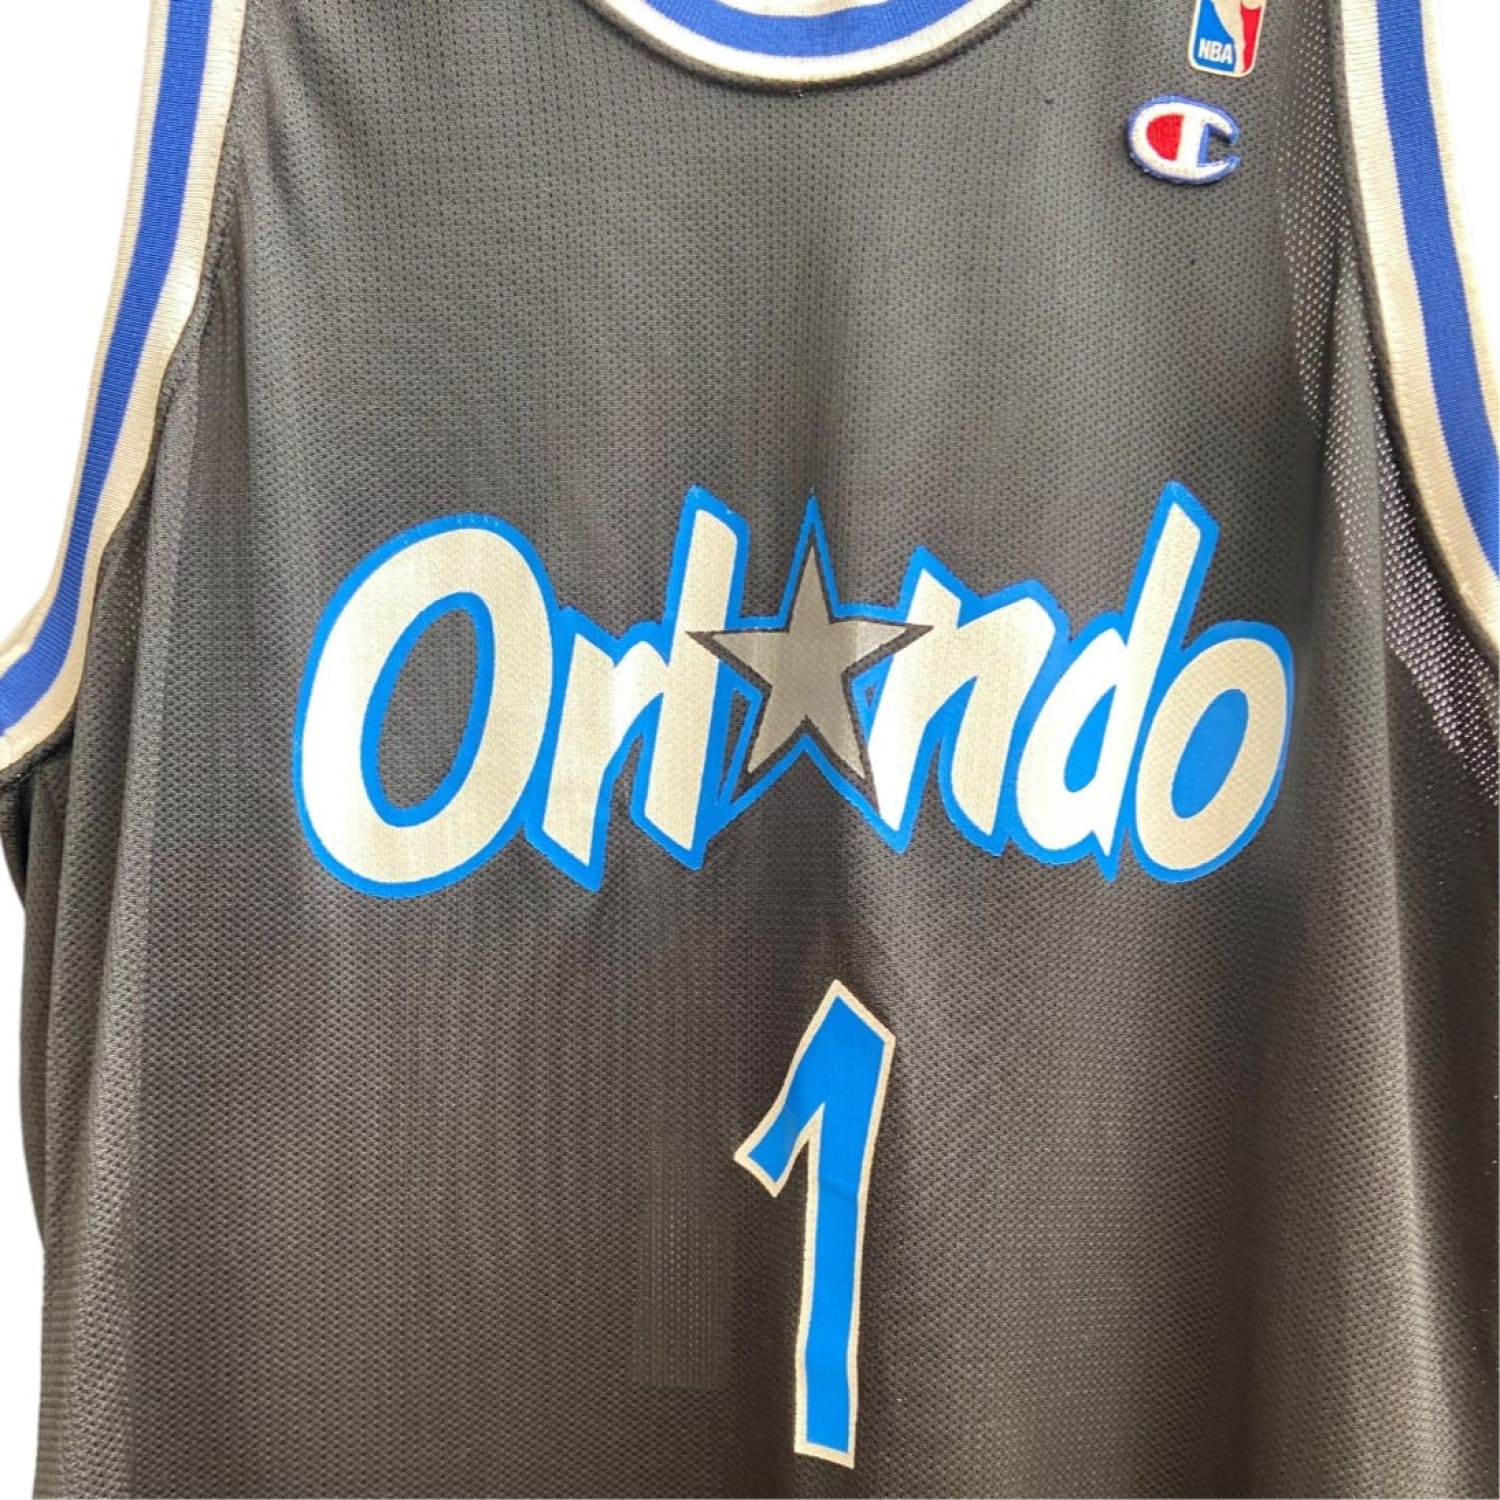 Vintage Orlando Hardway Basketball Jersey Vintage -